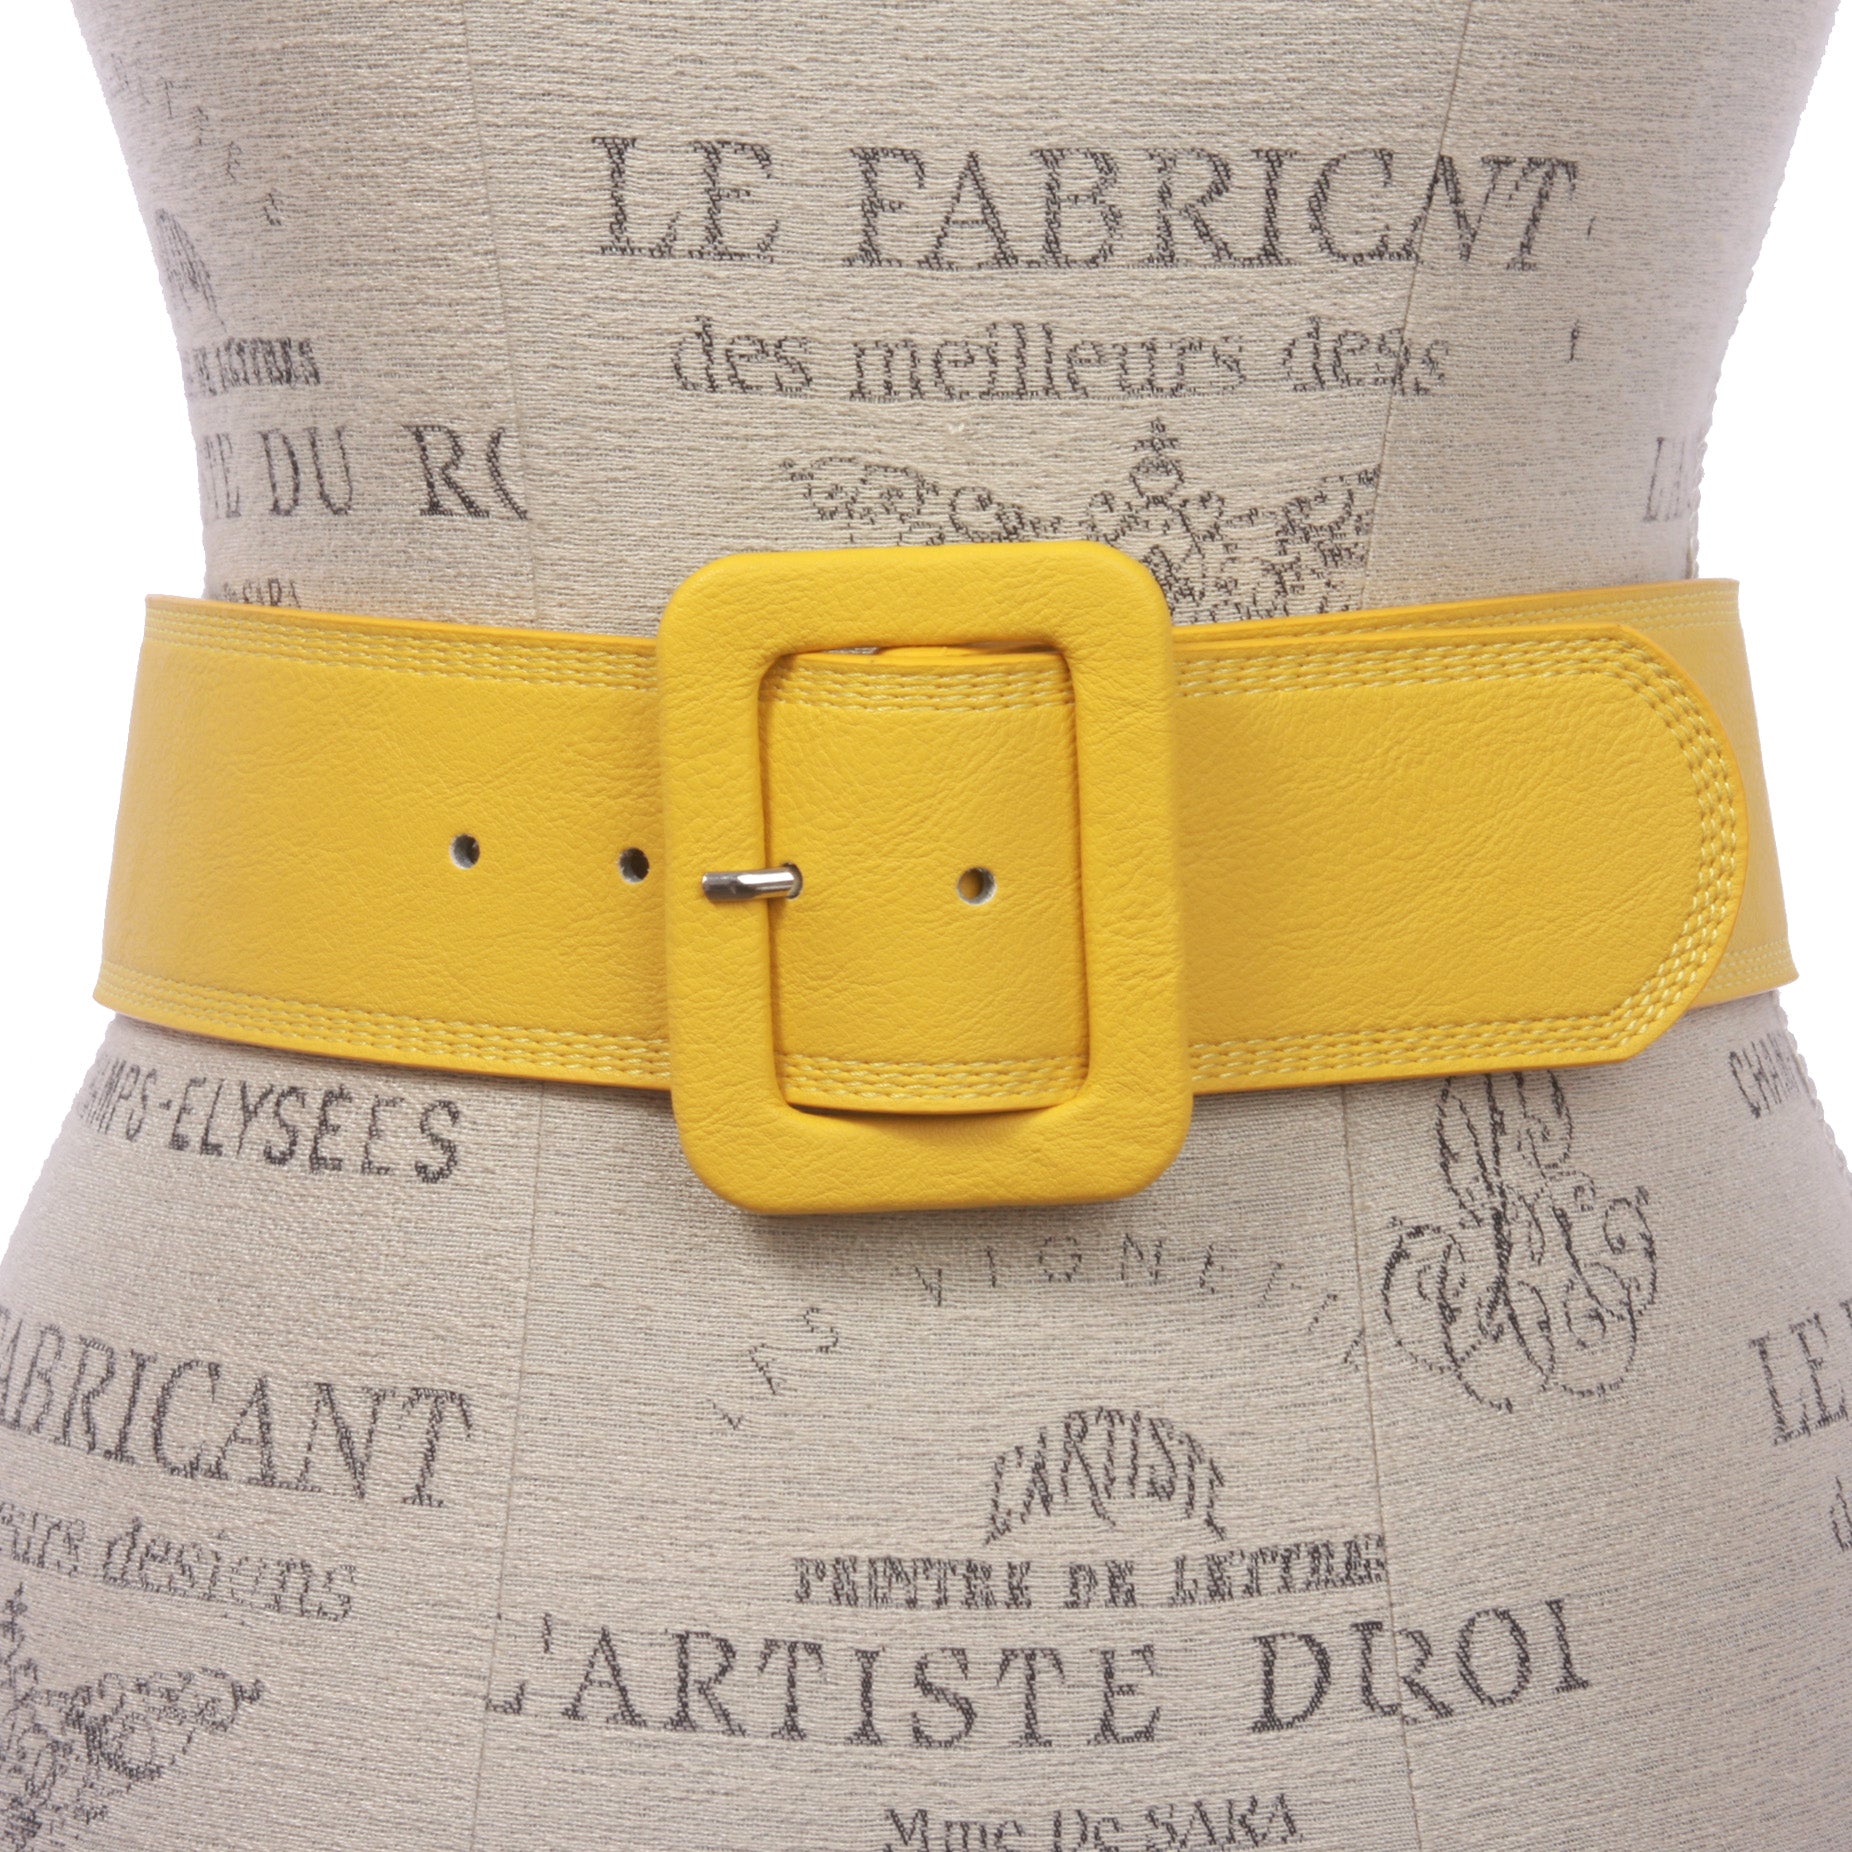 Women's 2 1/4" Wide High Waist Rectangular Stitch-edged Leather Belt